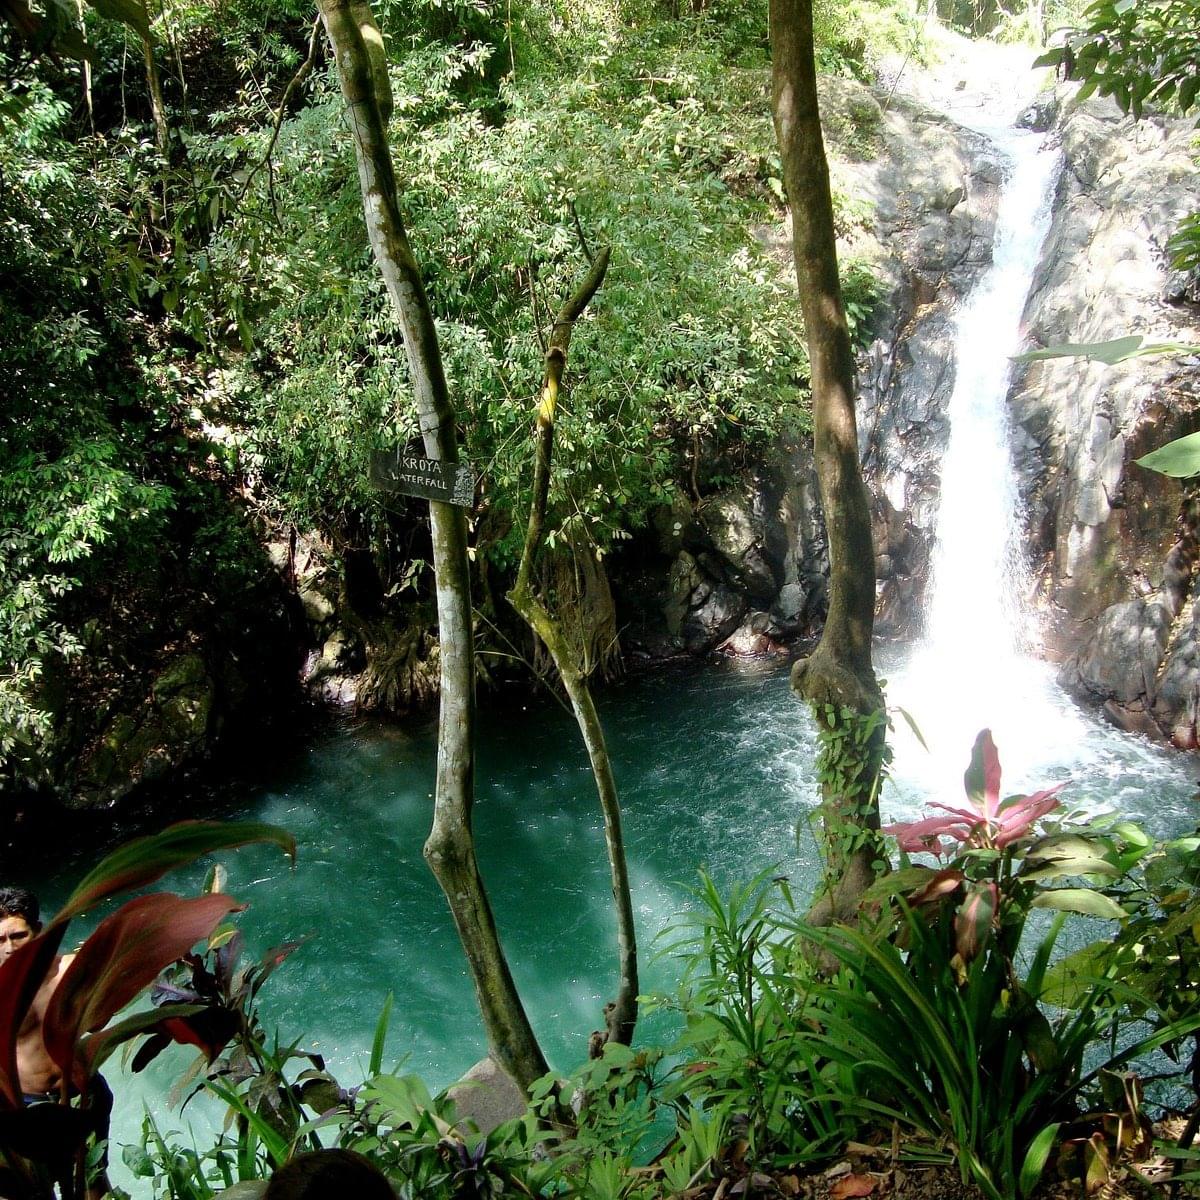 Explore the Kroya Waterfall’s natural pool